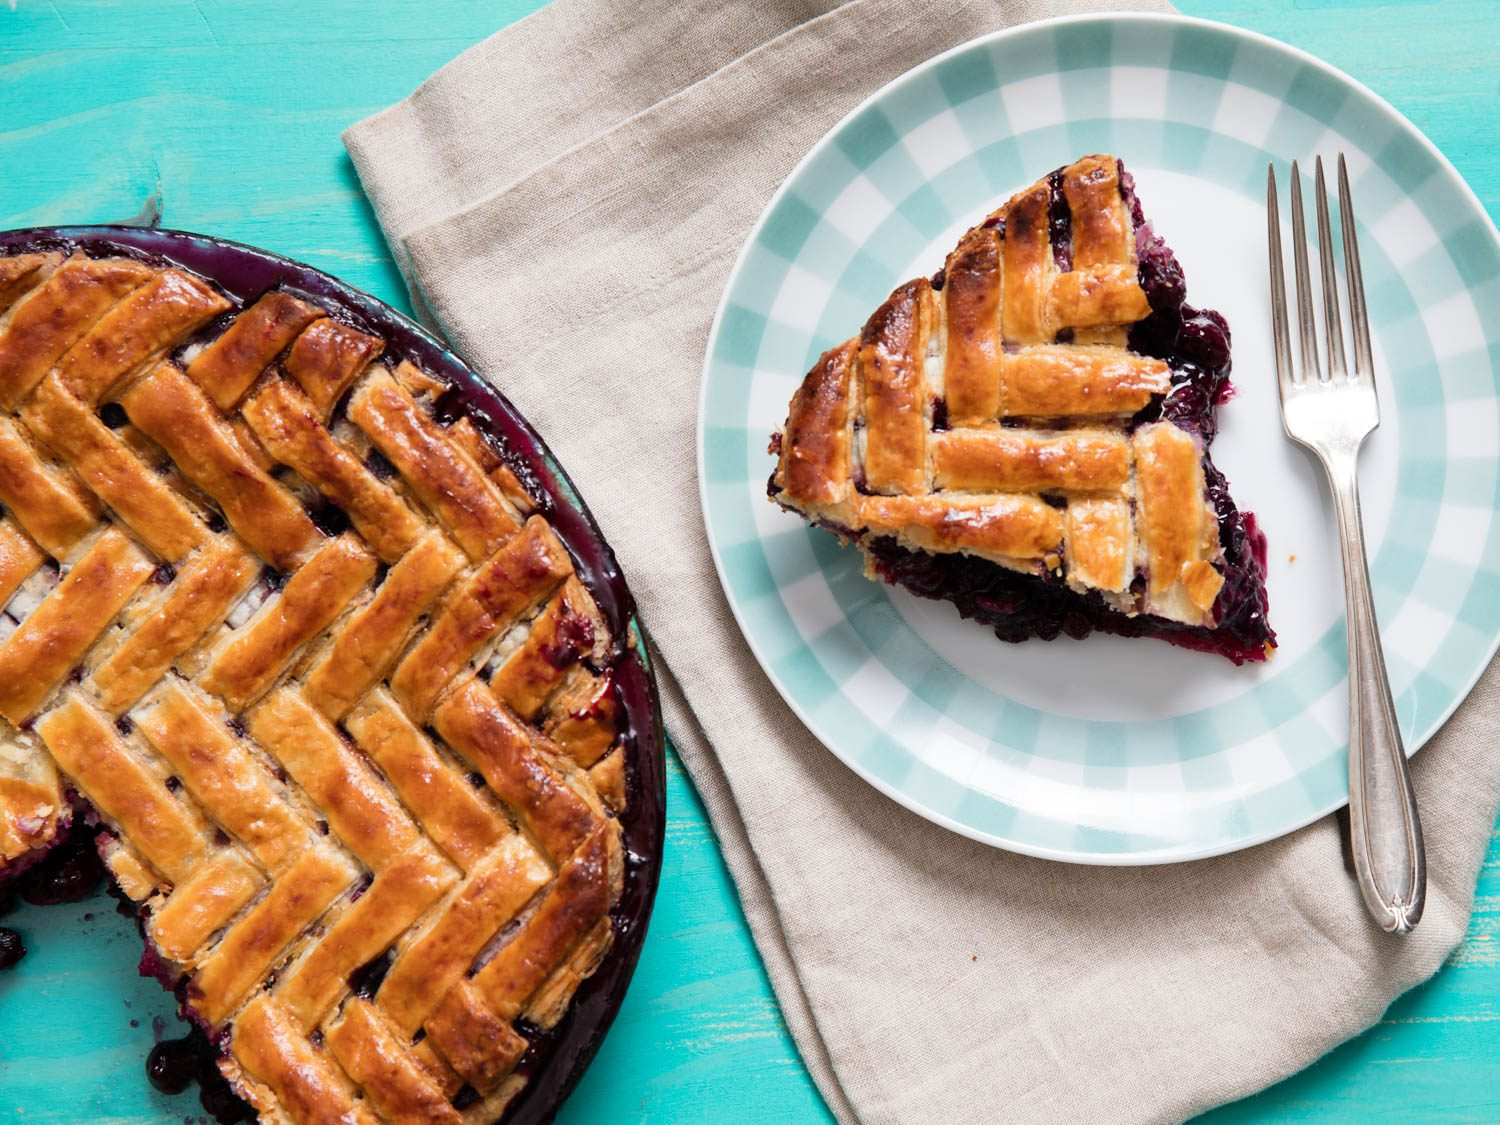 Blueberry Pie Recipes
 The Best Blueberry Pie Recipe